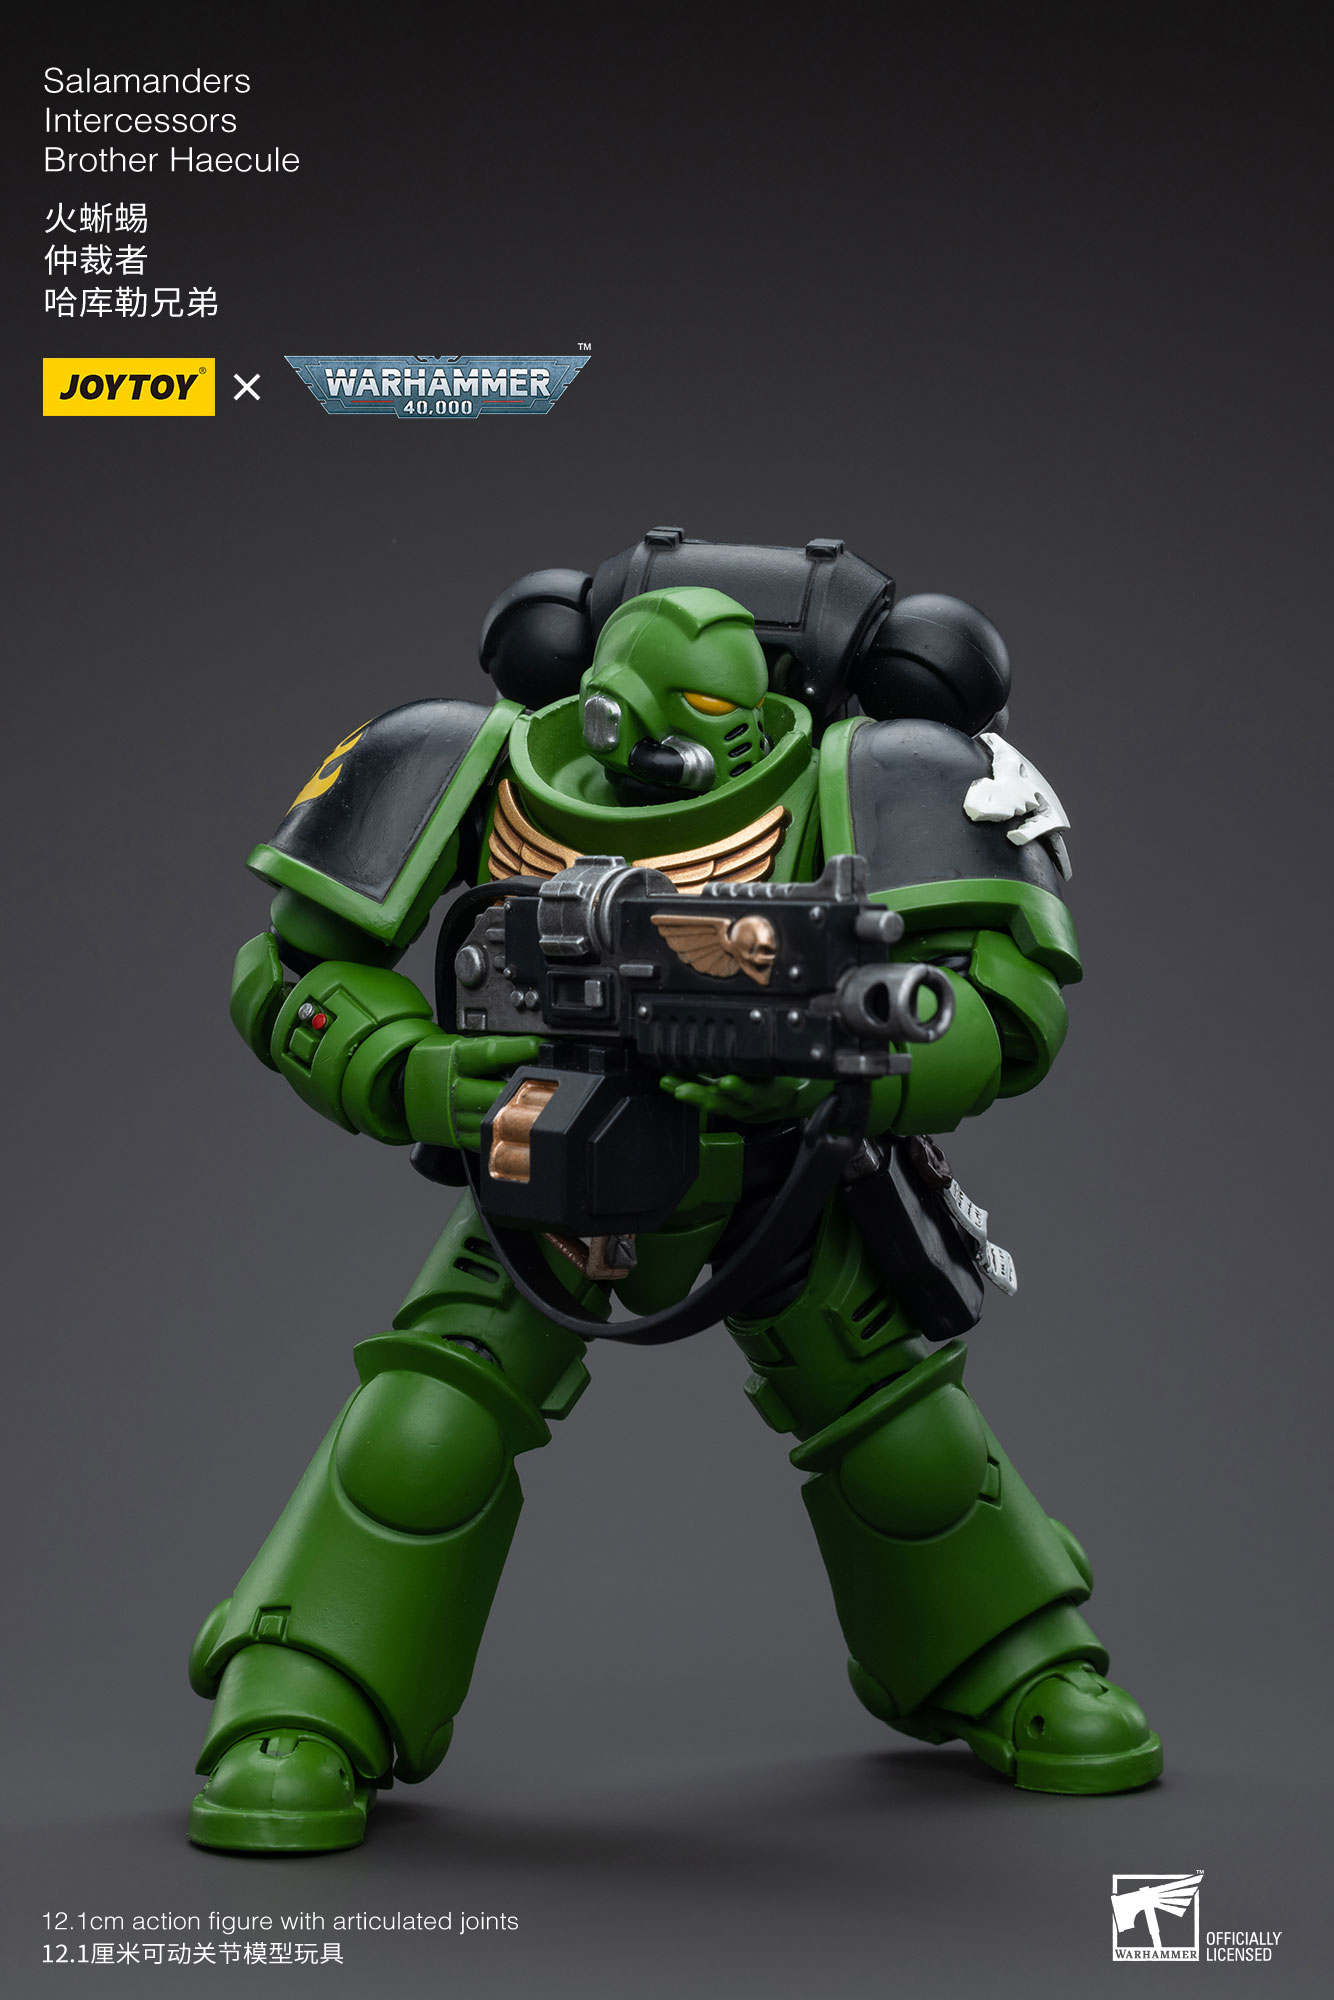 JoyToy Warhammer 40K Salamanders Intercessors Brother Haecule » Joytoy  Figure